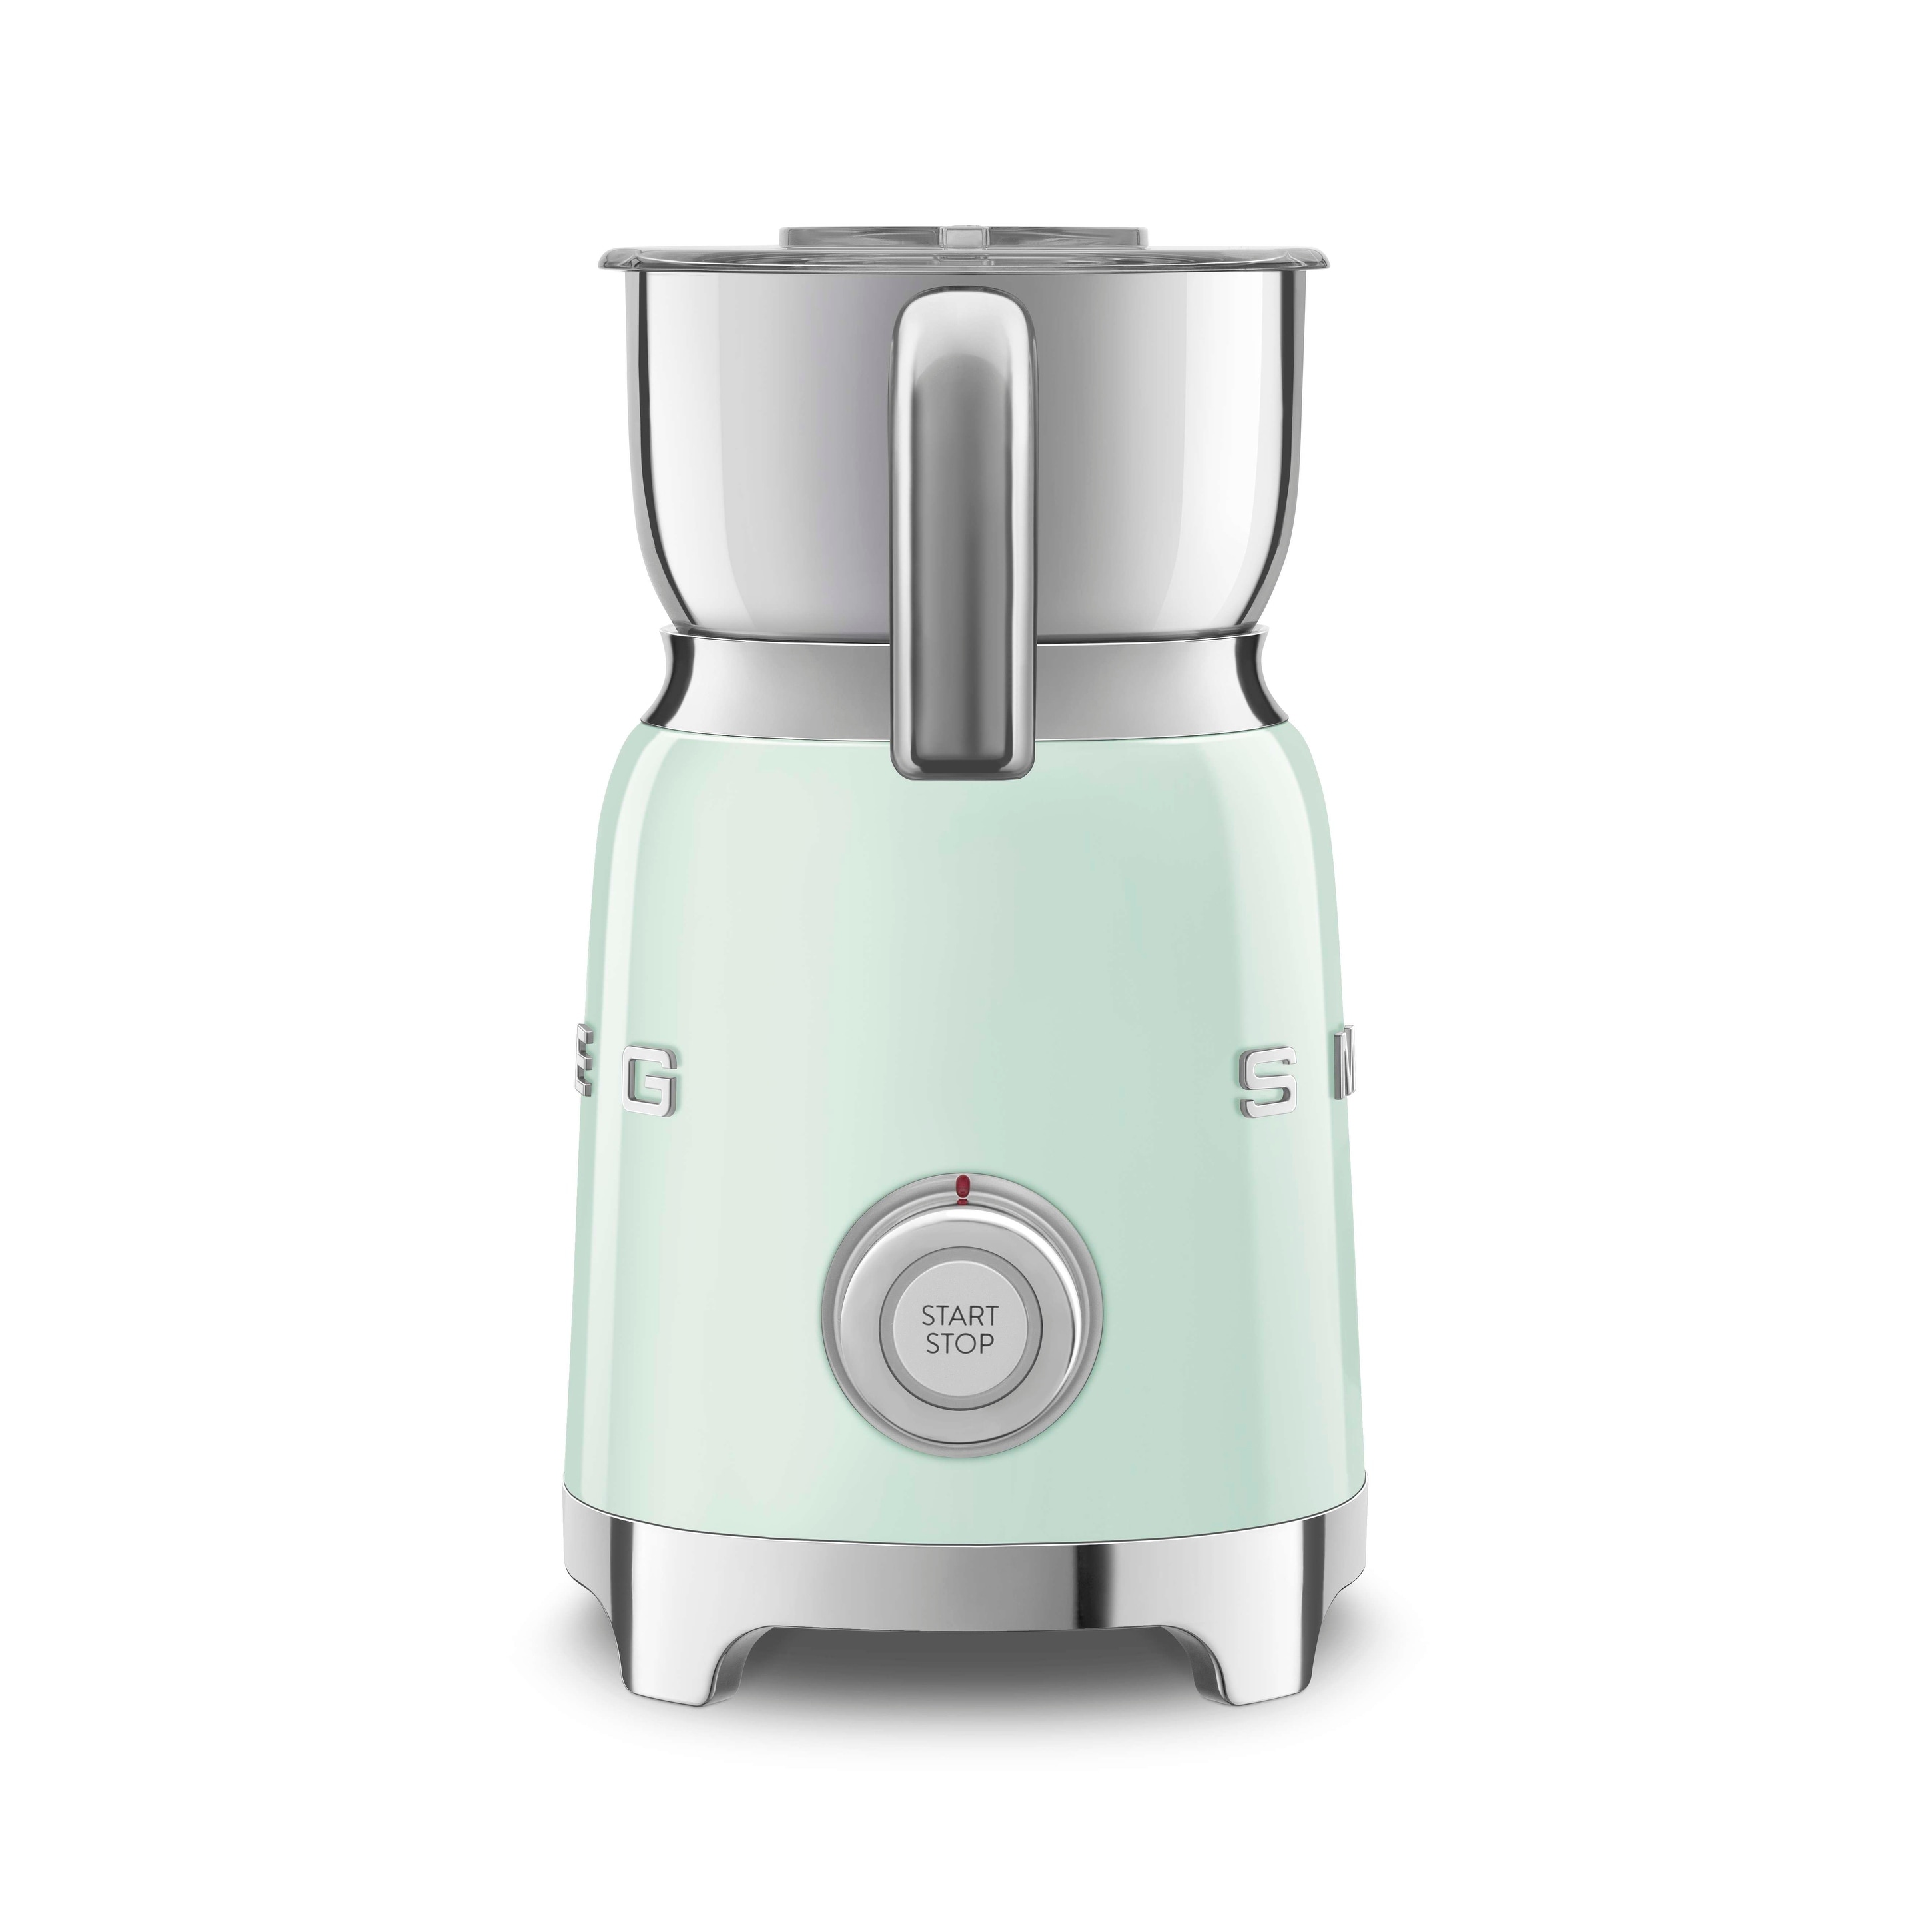 SMEG Cream Semi-Automatic Coffee and Espresso Machine with Milk Frother